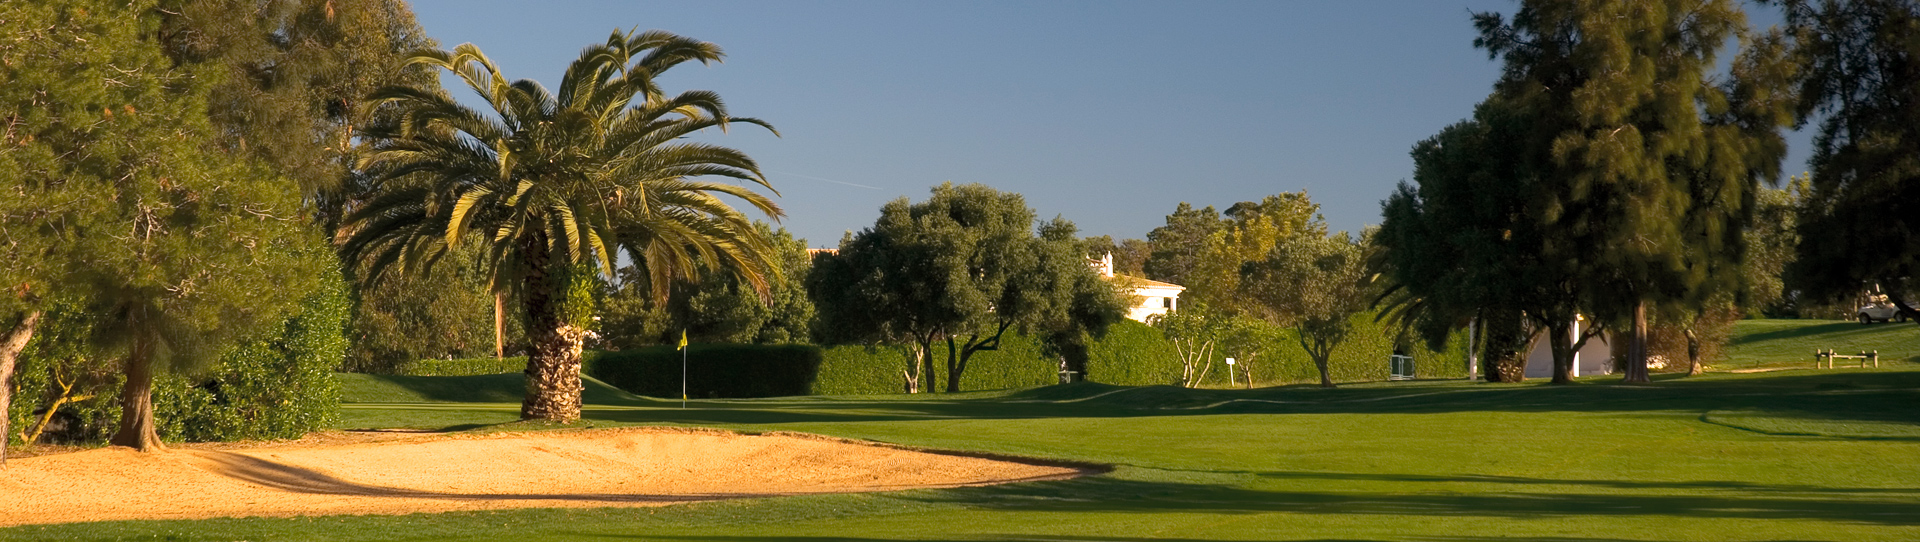 Portugal golf holidays - Pestana Algarve Golf Package   - Photo 1